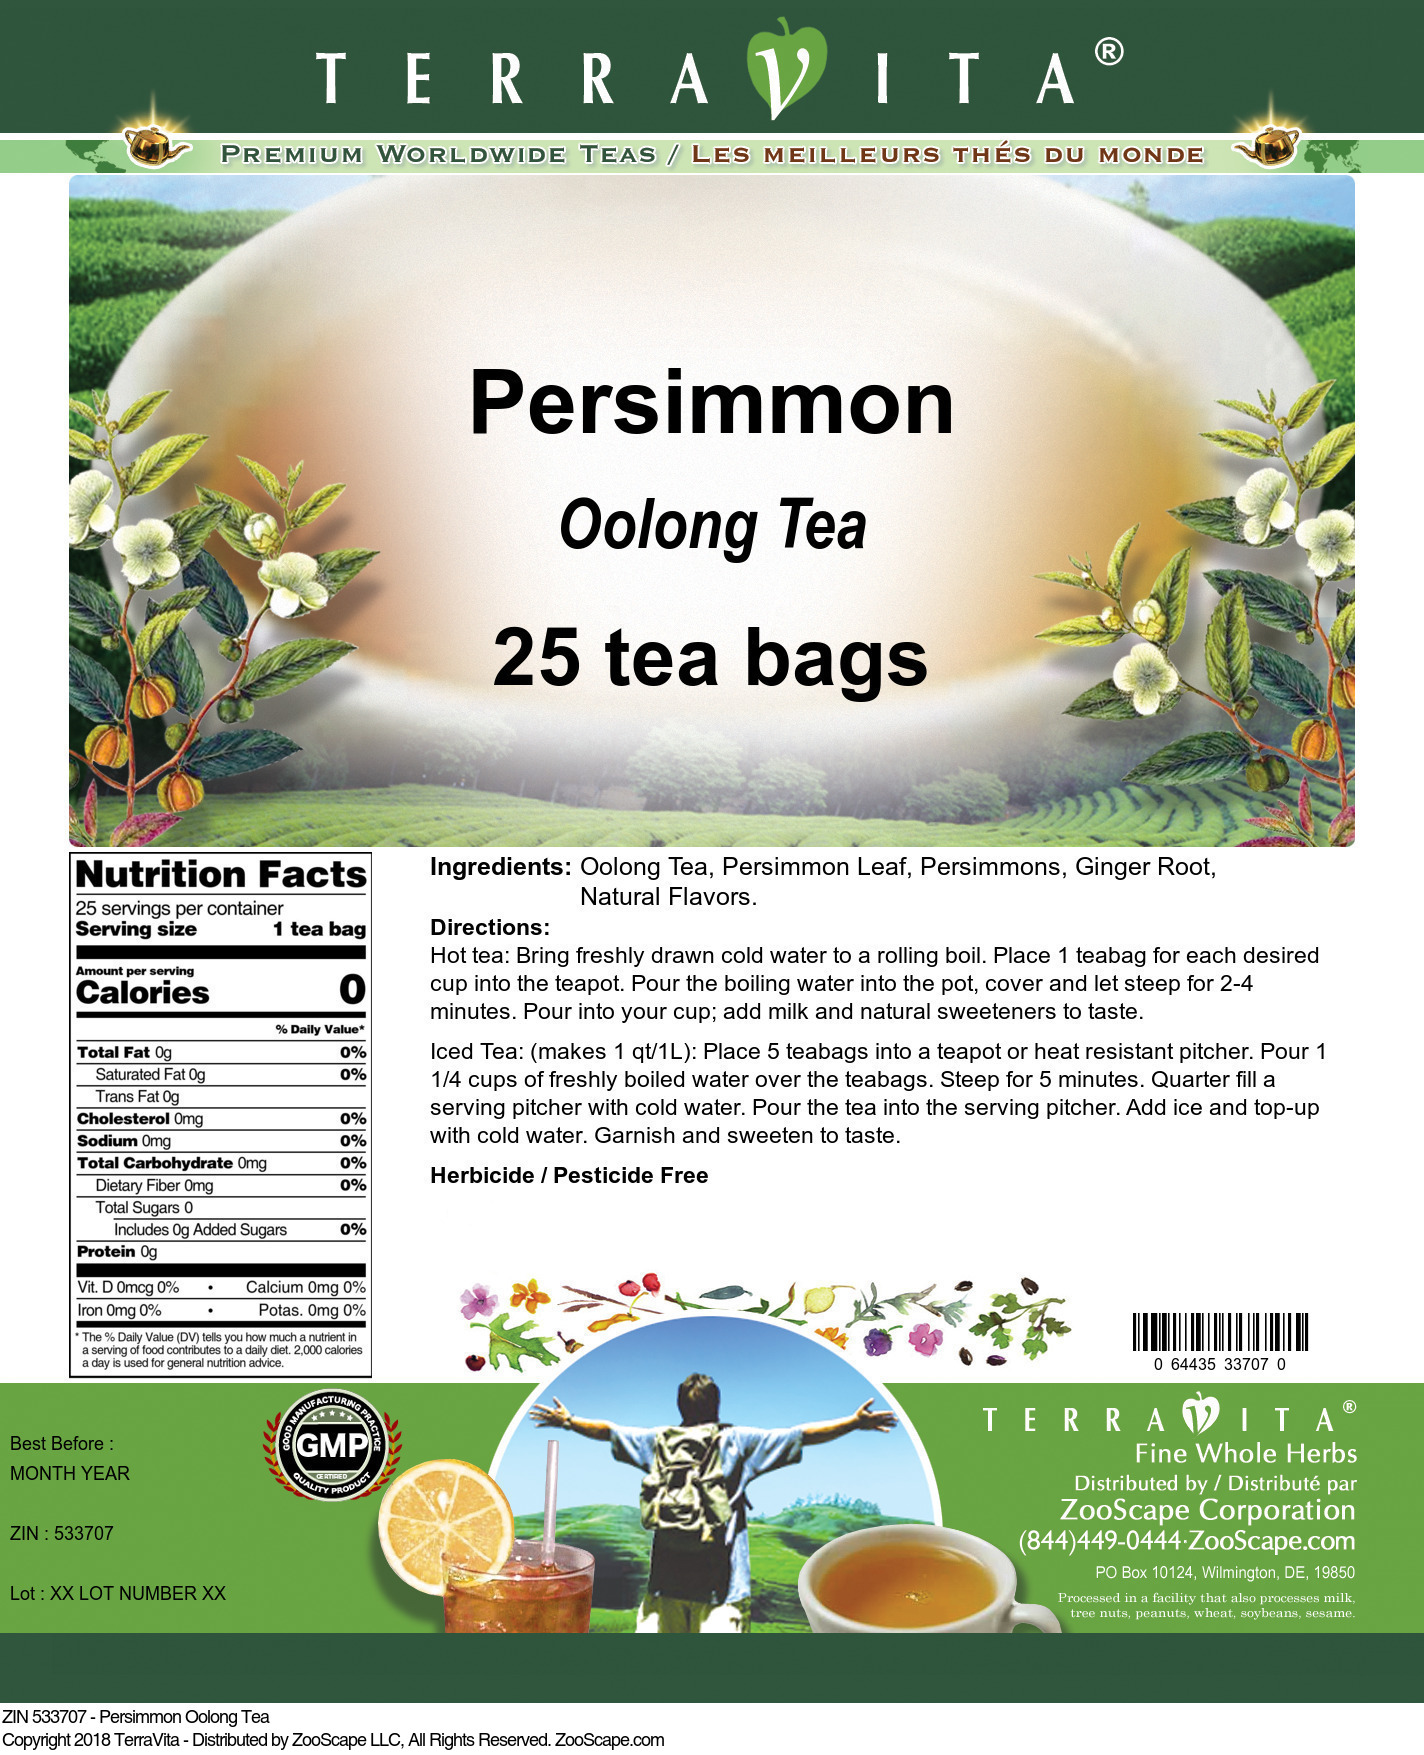 Persimmon Oolong Tea - Label